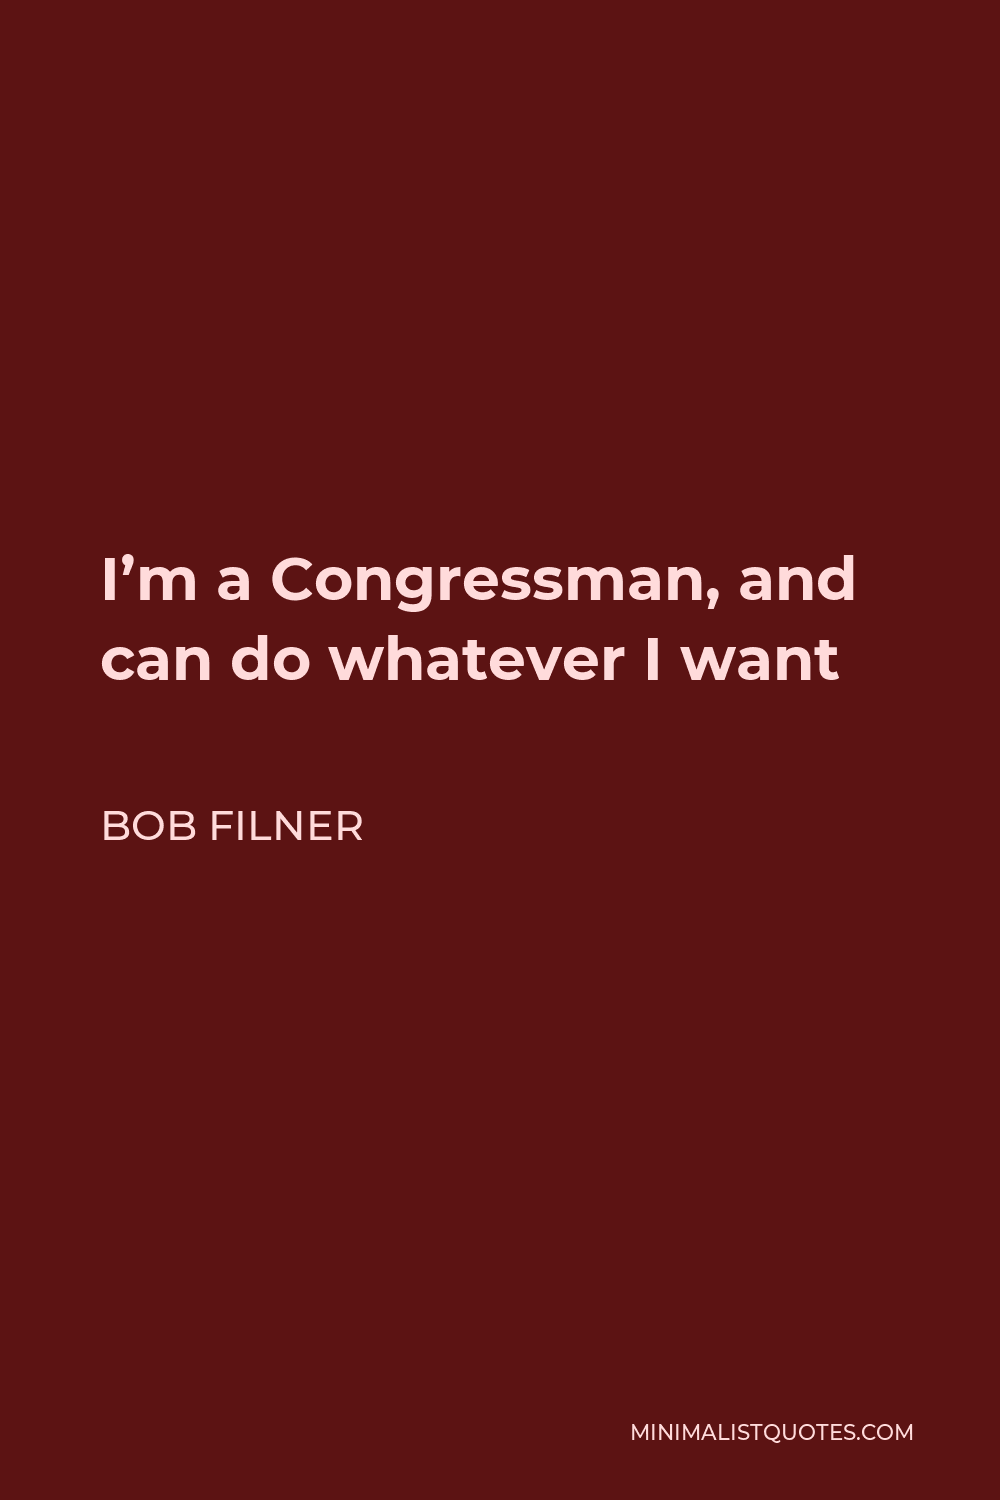 Bob Filner Quote - I’m a Congressman, and can do whatever I want